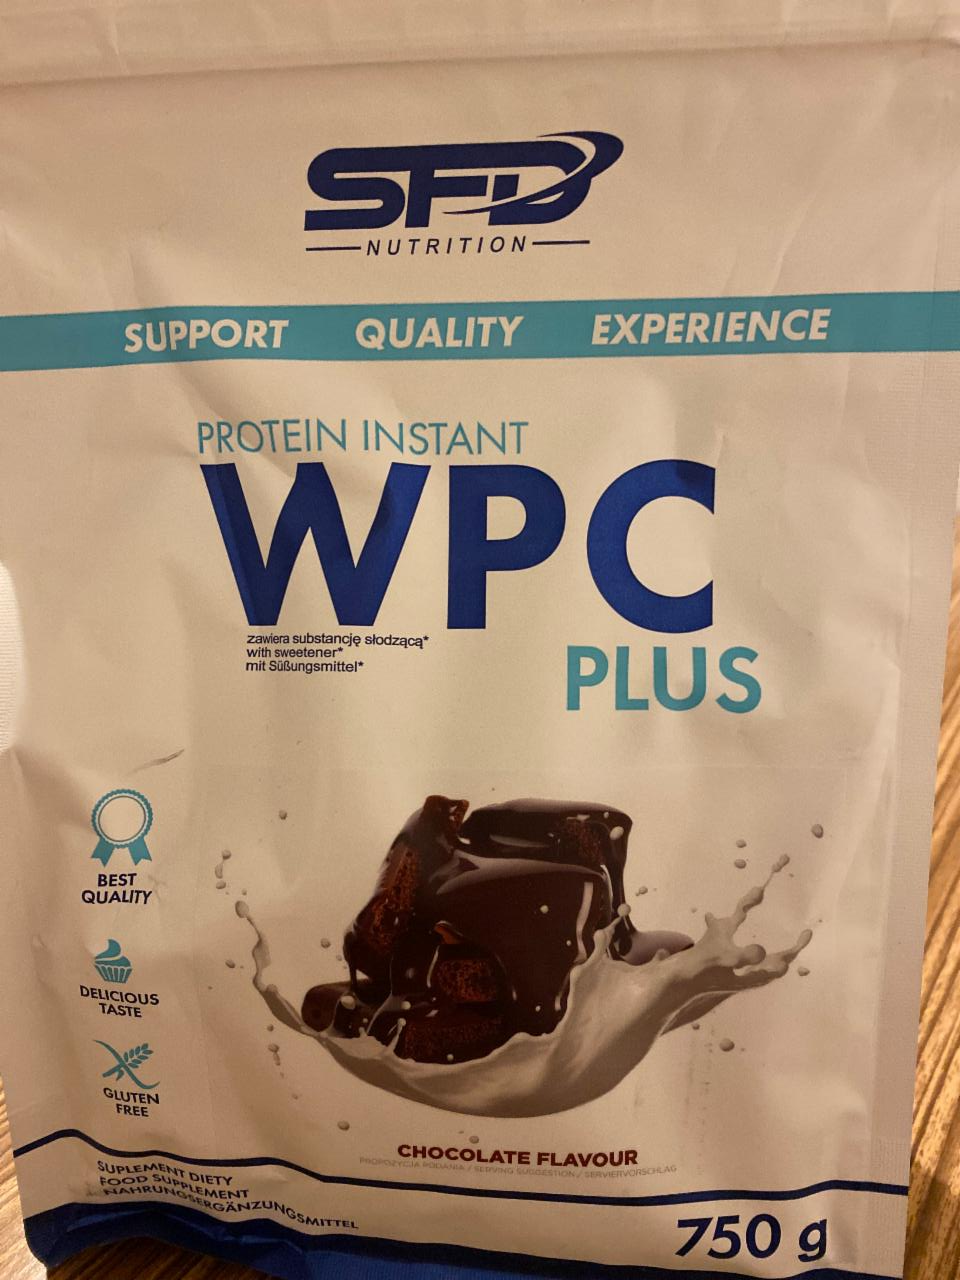 Fotografie - WPC Plus Protein Instant Chocolate SFD Nutrition